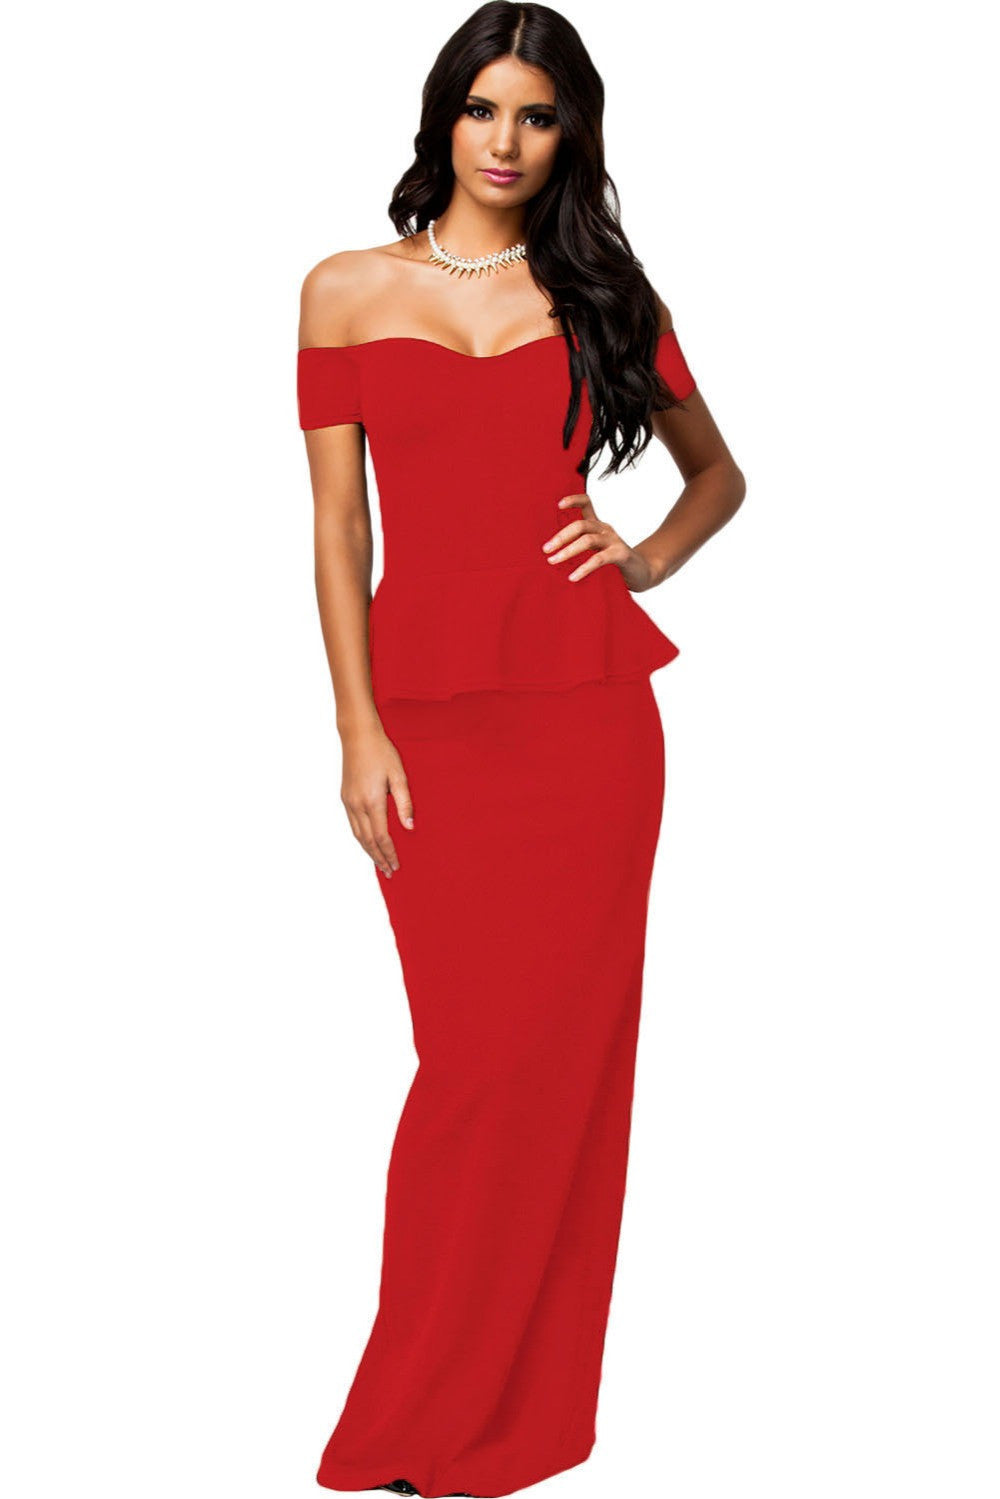 Online discount shop Australia - Autumn Formal Maxi Dresses Black Short Sleeve Off Shoulder Women Peplum Party Dress LC6244